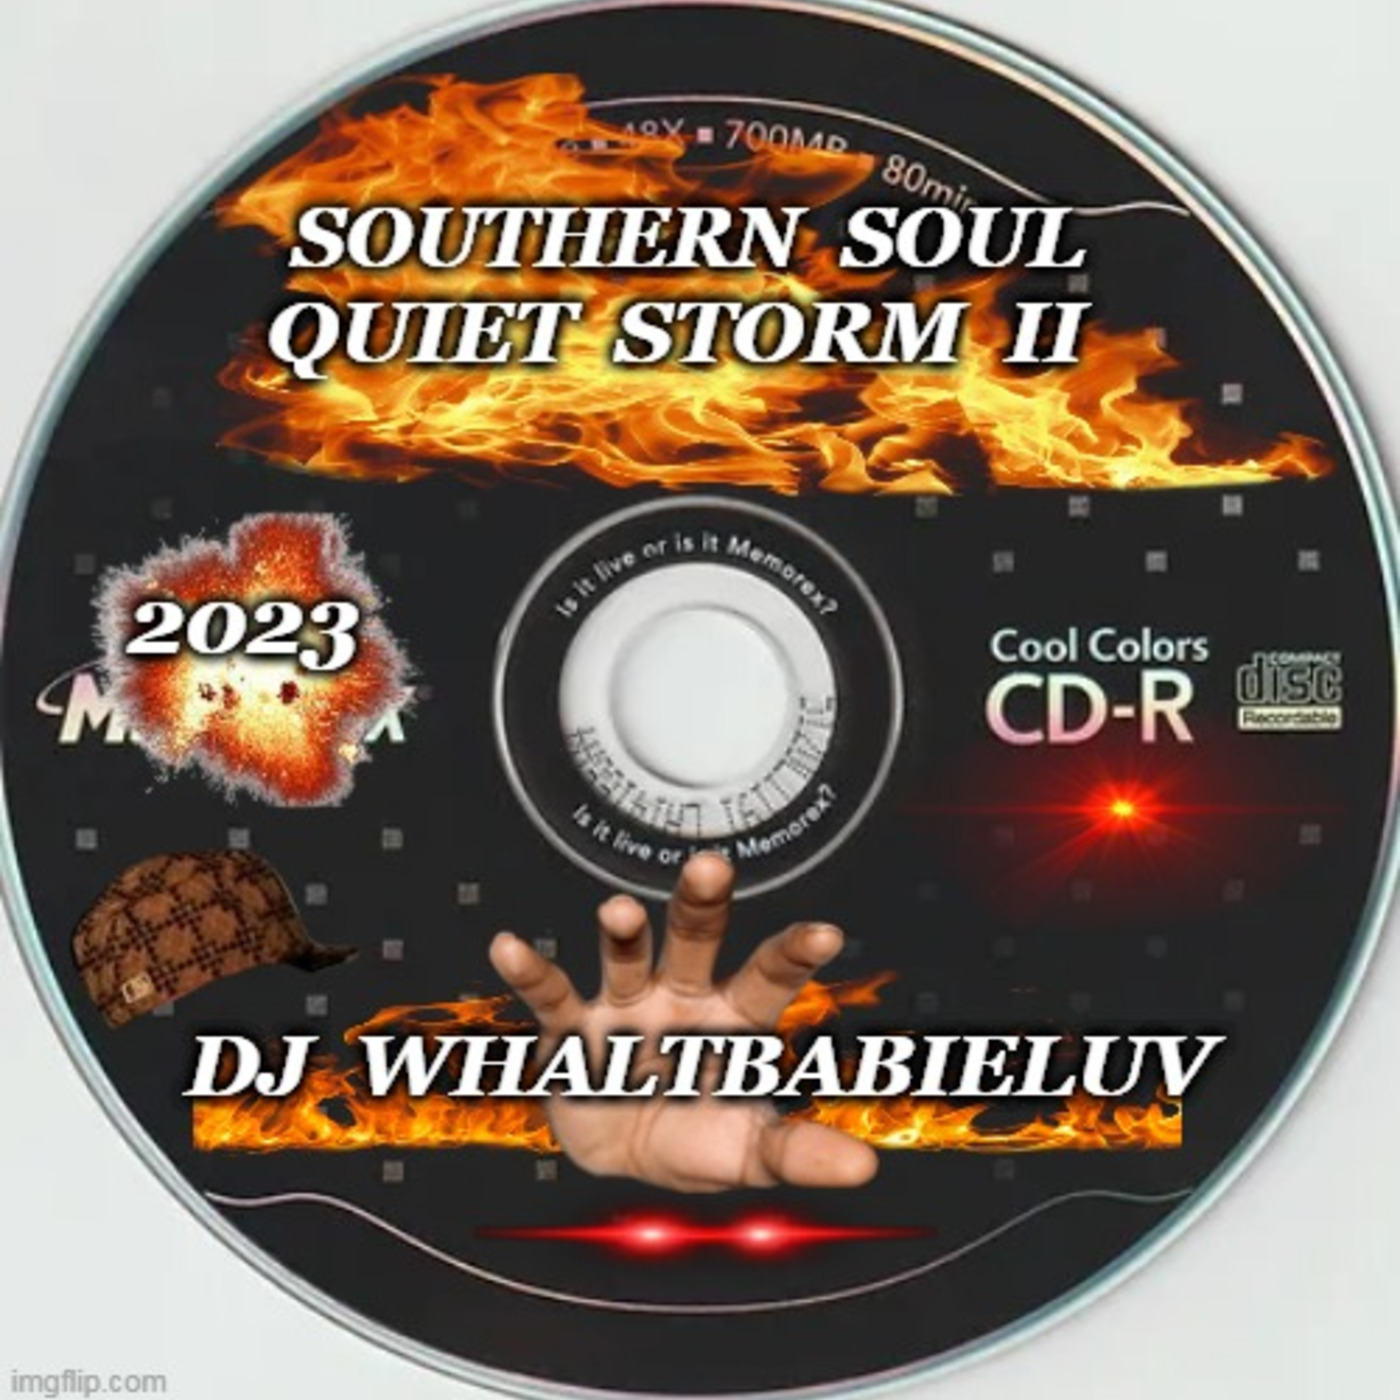 Southern Soul Quiet Storm II  2023 (Dj WhaltBabieLuv)